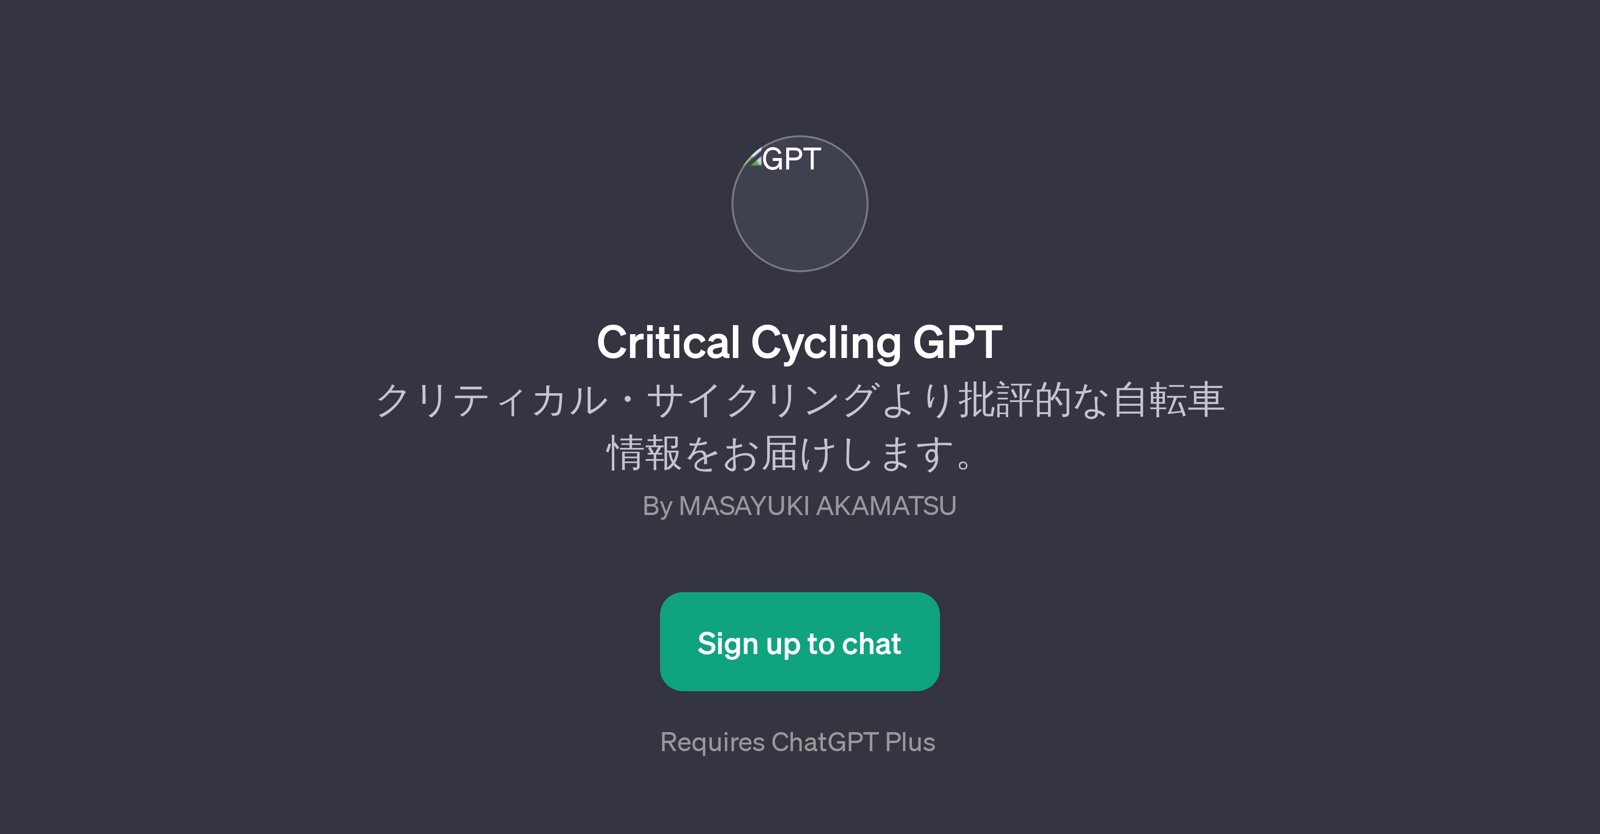 Critical Cycling GPT website